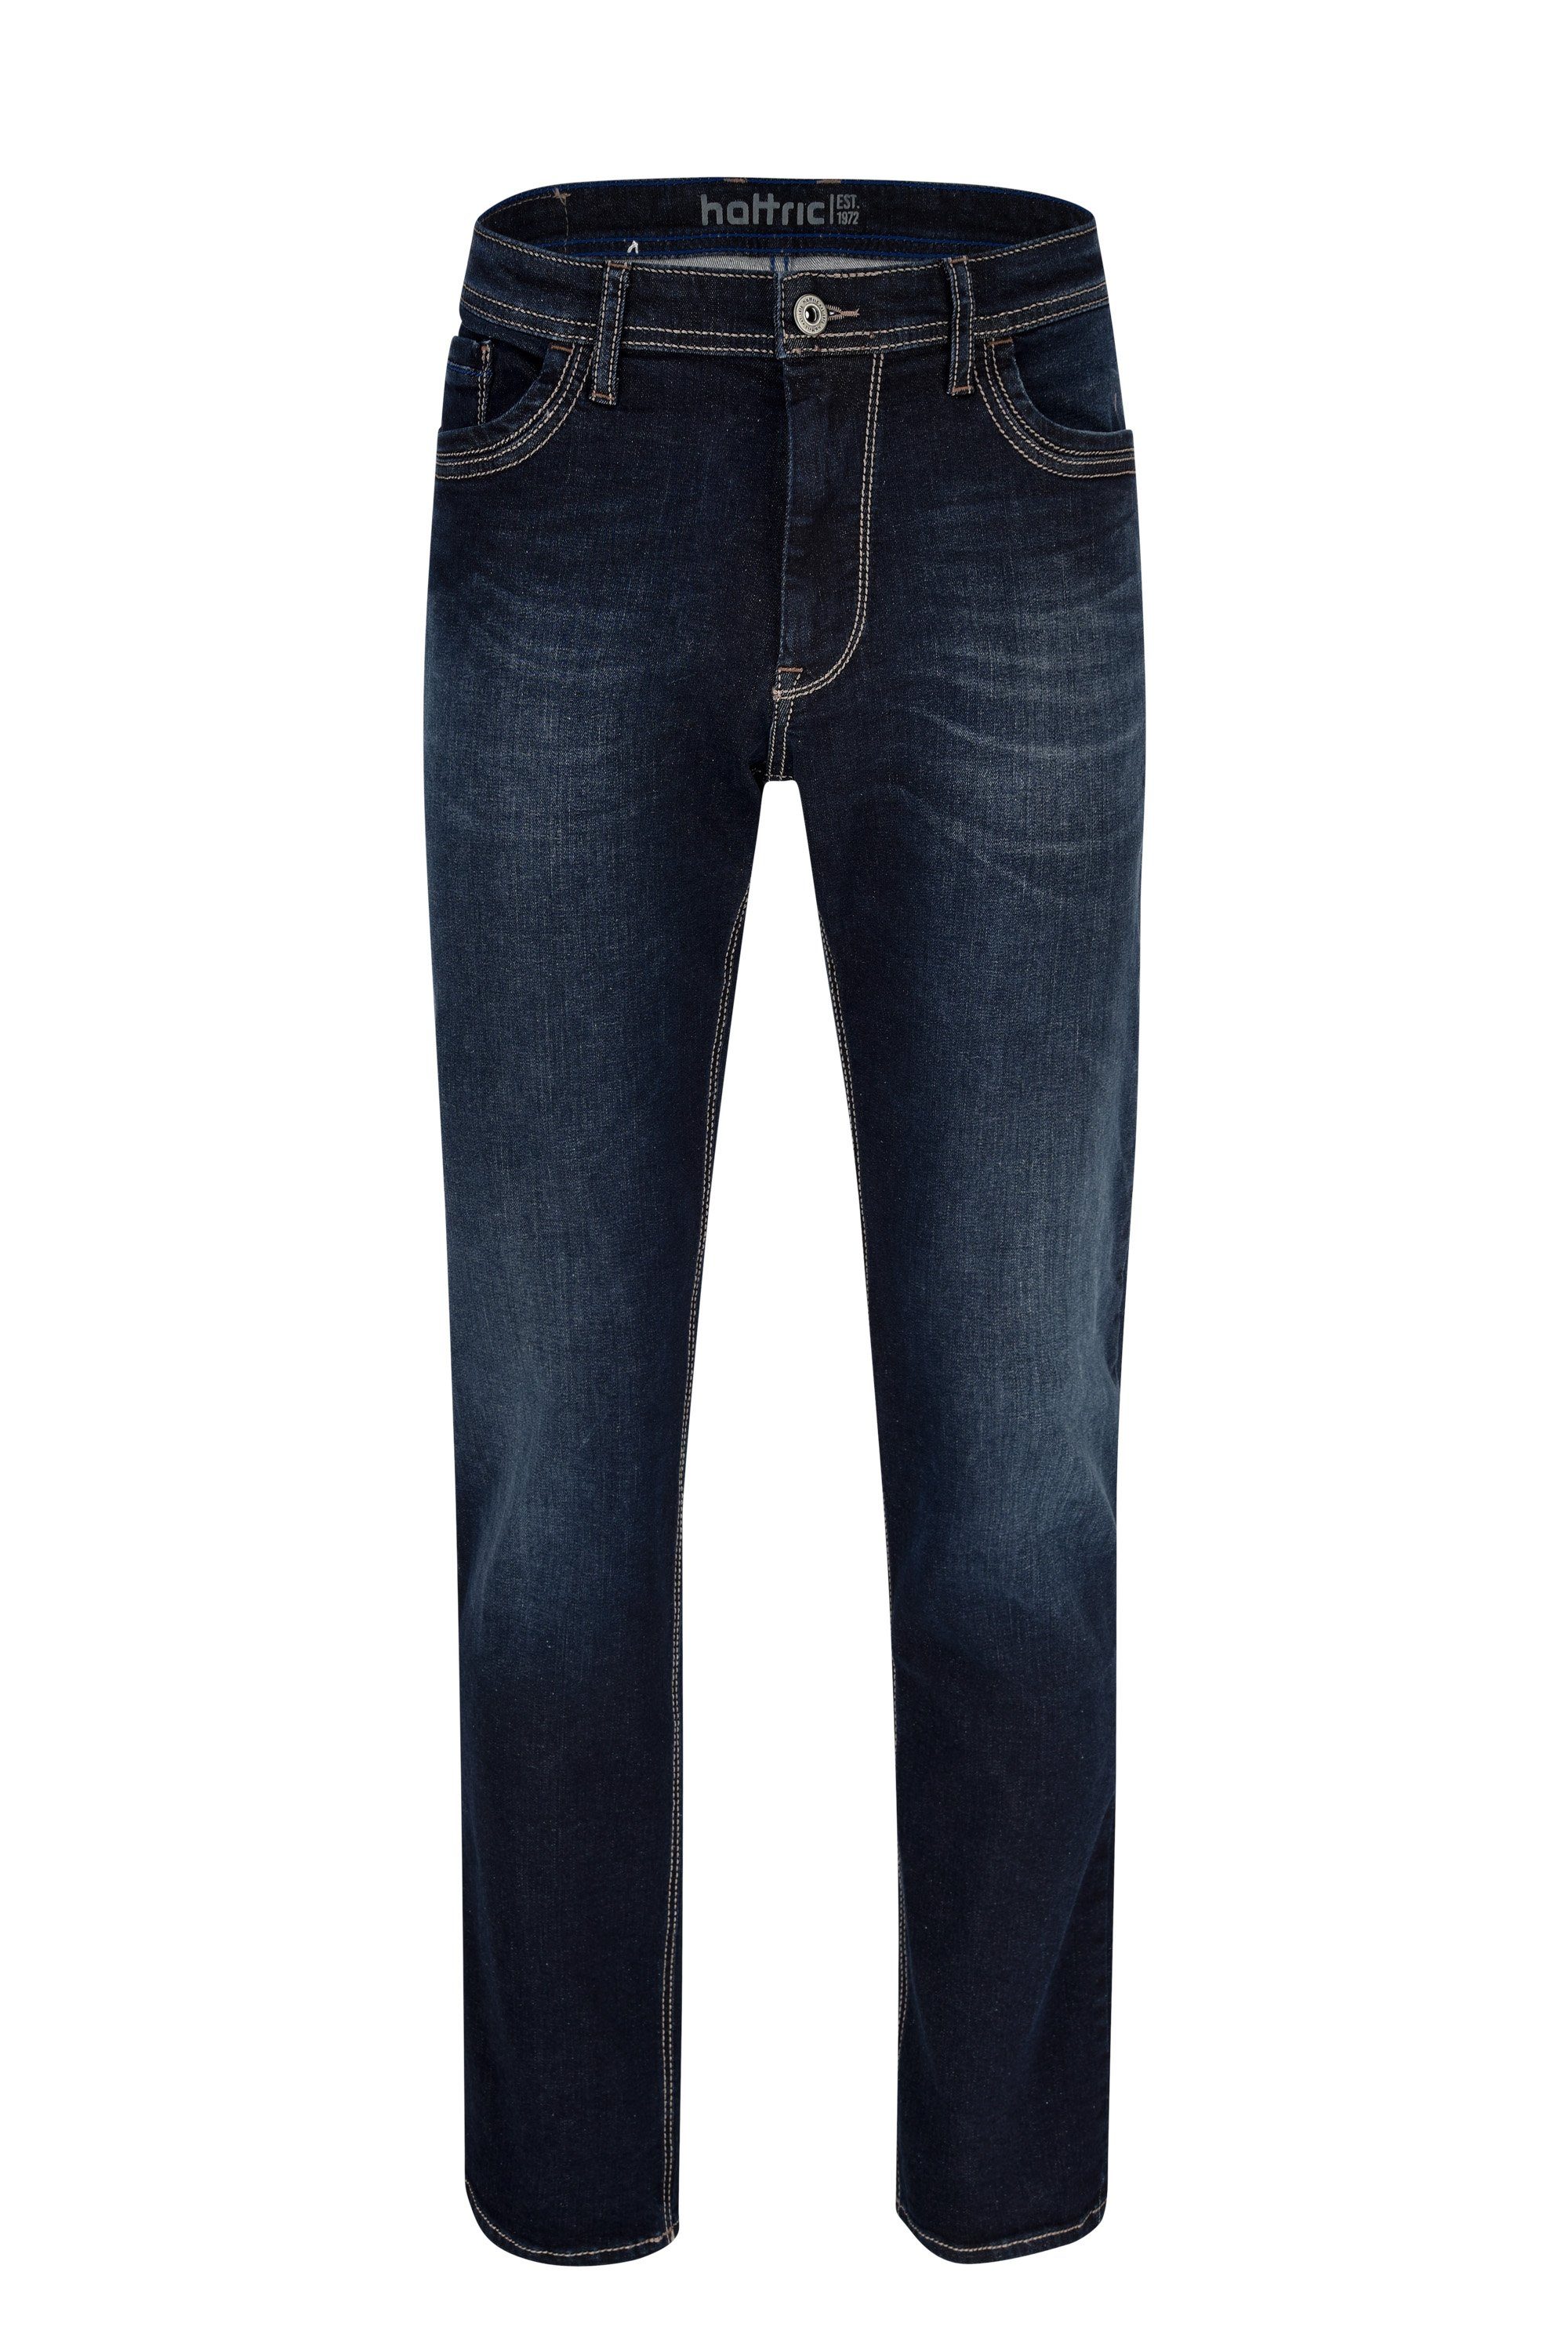 Hattric 5-Pocket-Jeans HATTRIC HUNTER dark blue 688385 9696.95 - HIGH-STRETCH